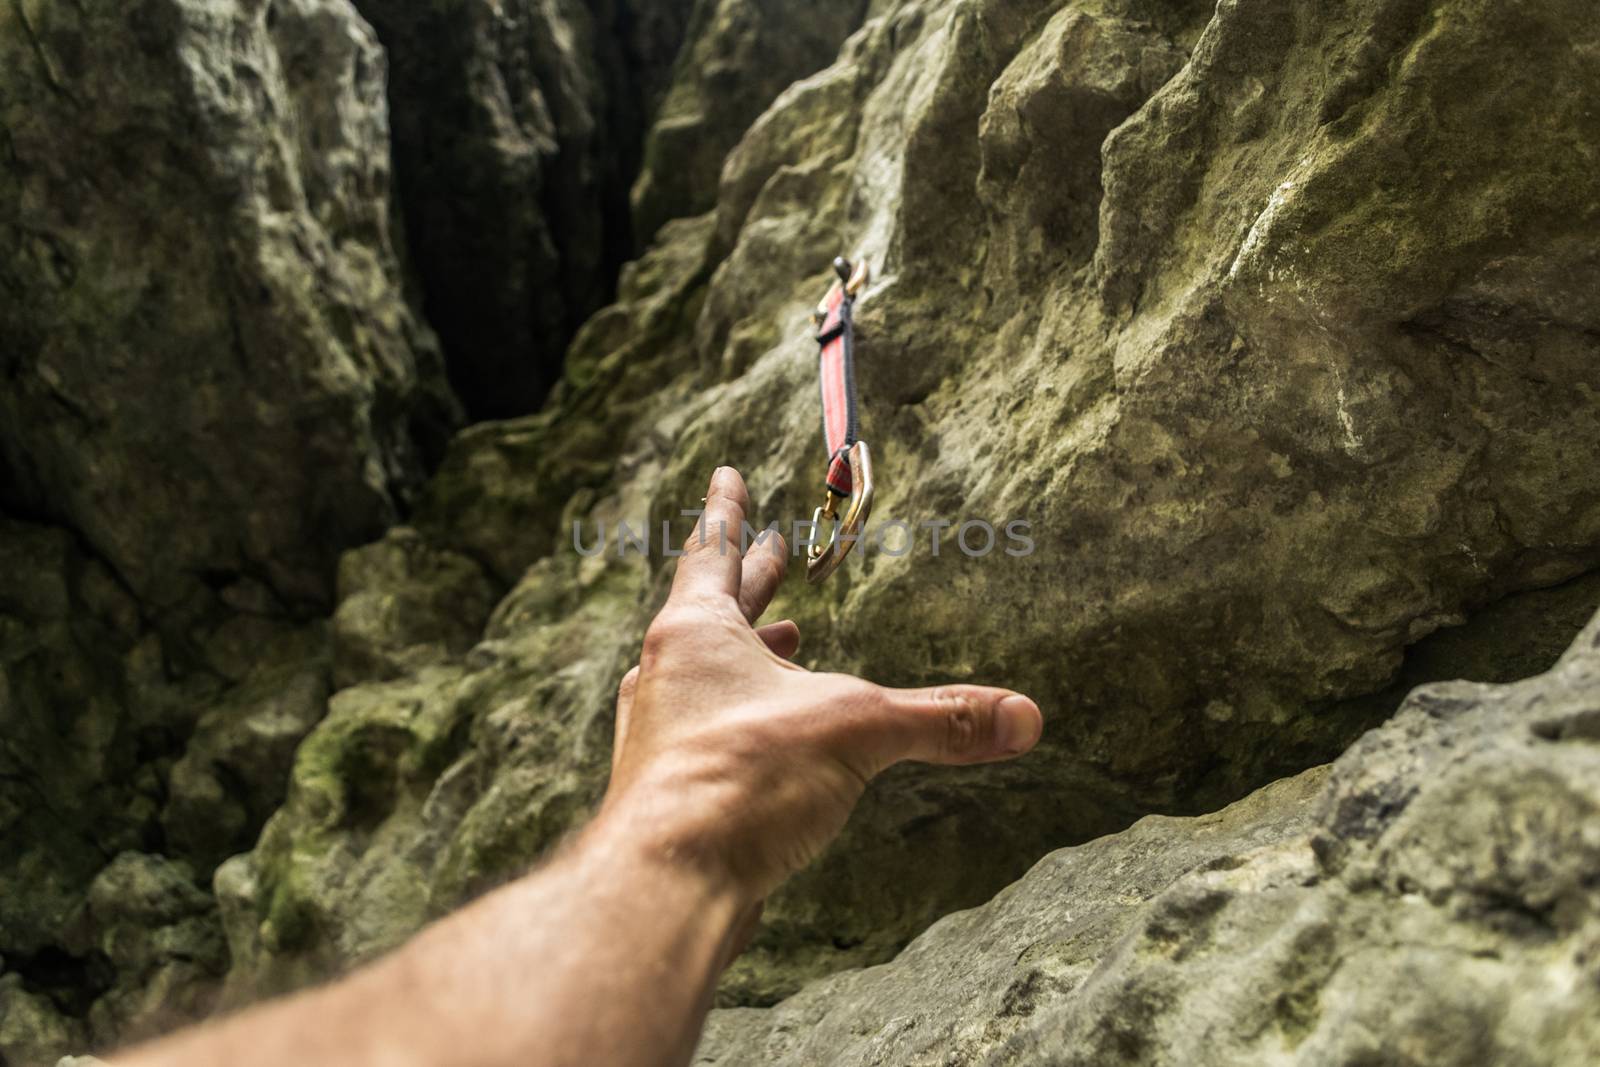 The climber's hand reaches the carbine. Rock climbing